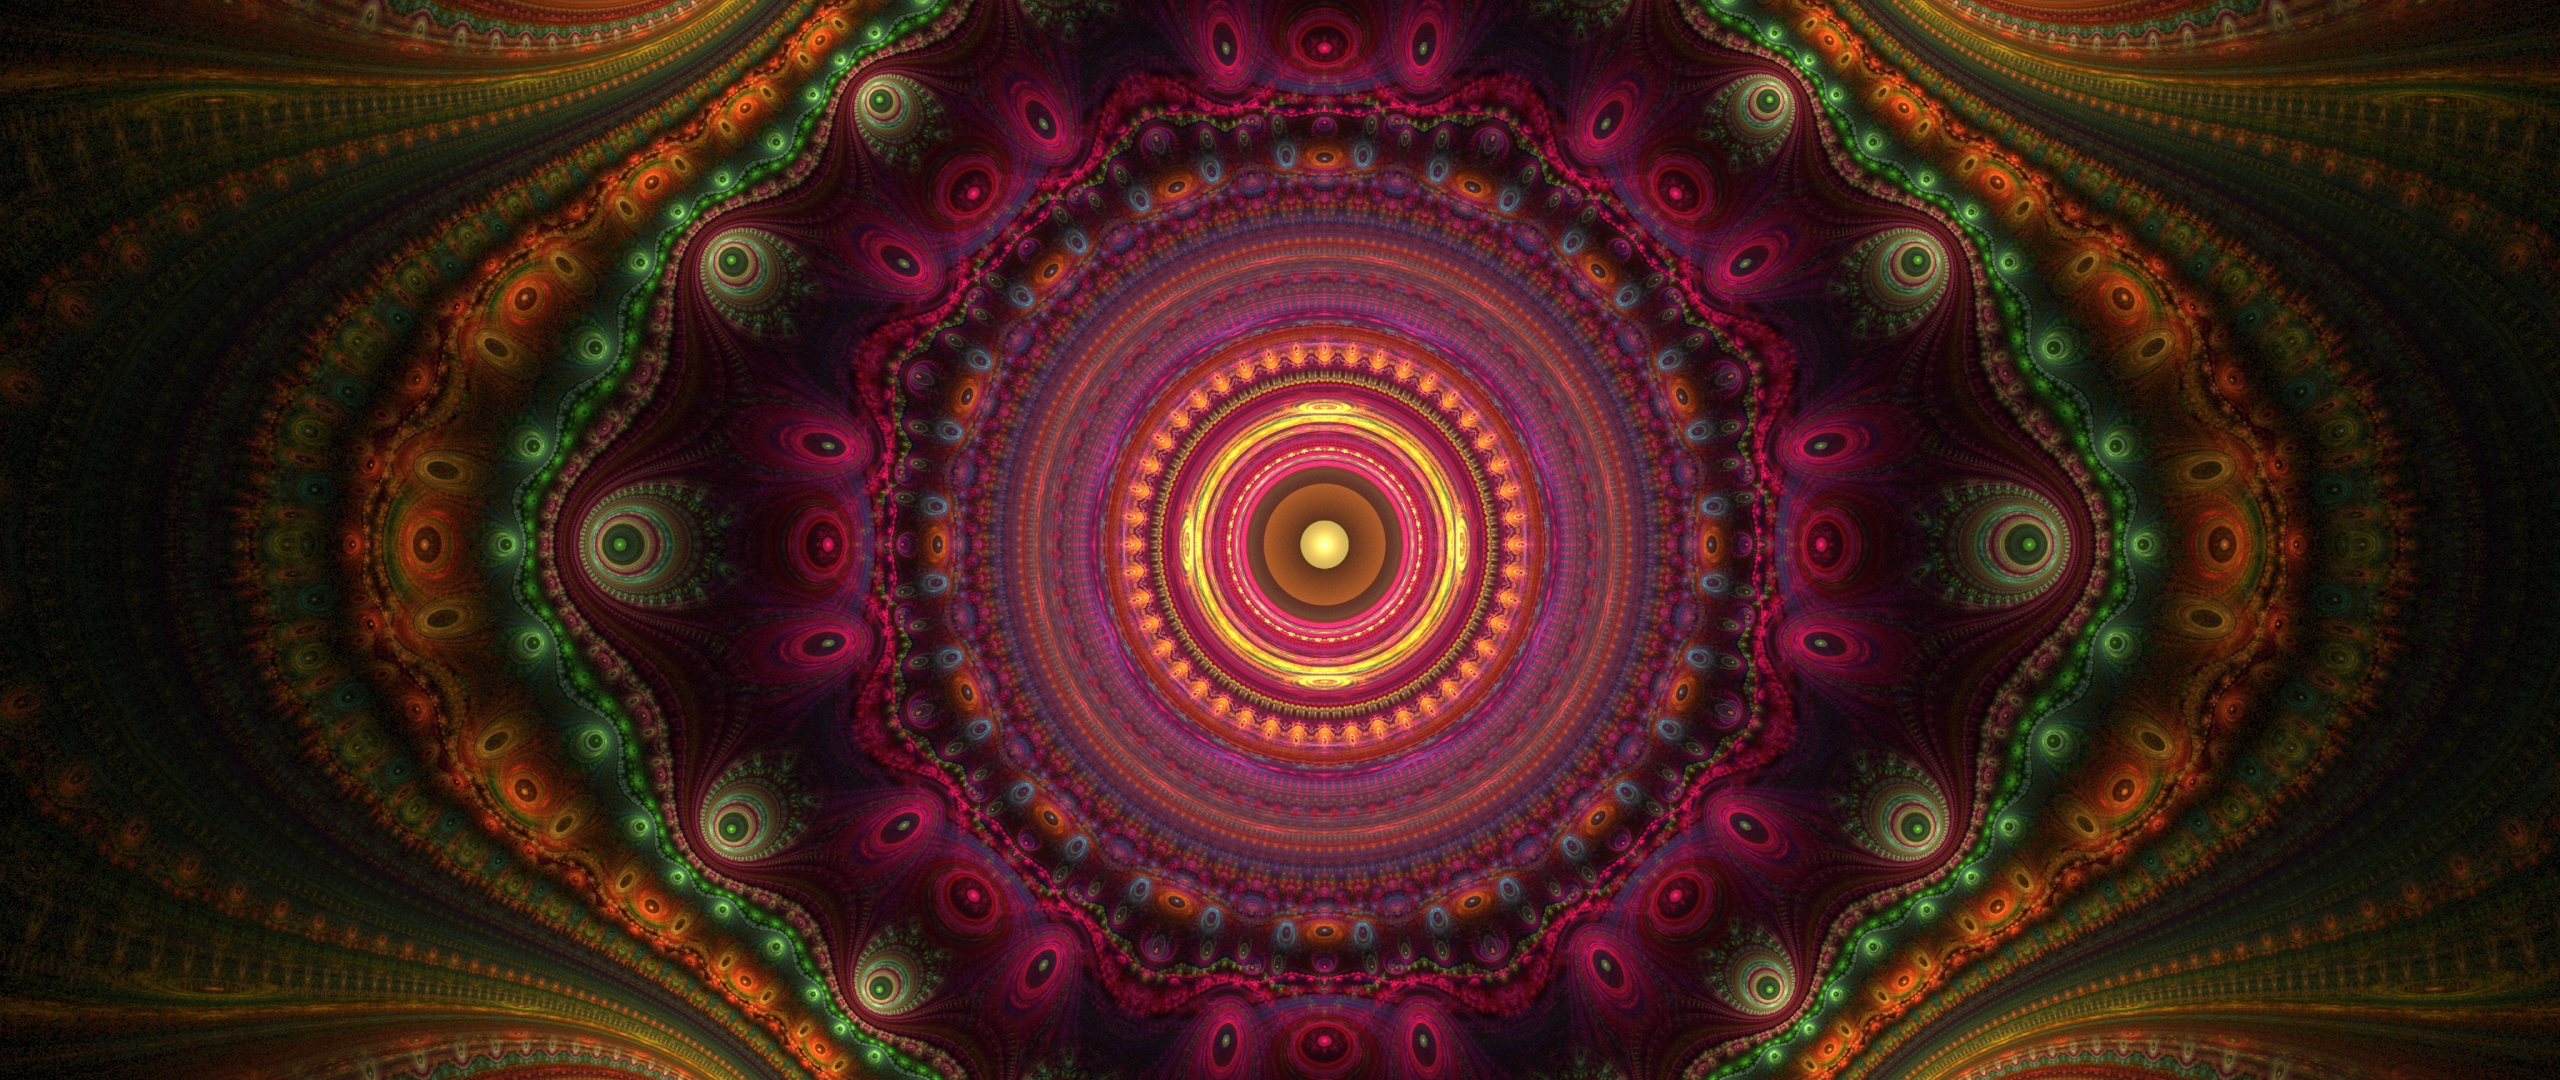 Kaleidoscope wallpaper. Hypnotic abstract image. Mandala surreal ornament.  Psychedelic multicolor illustration. Stock Illustration | Adobe Stock